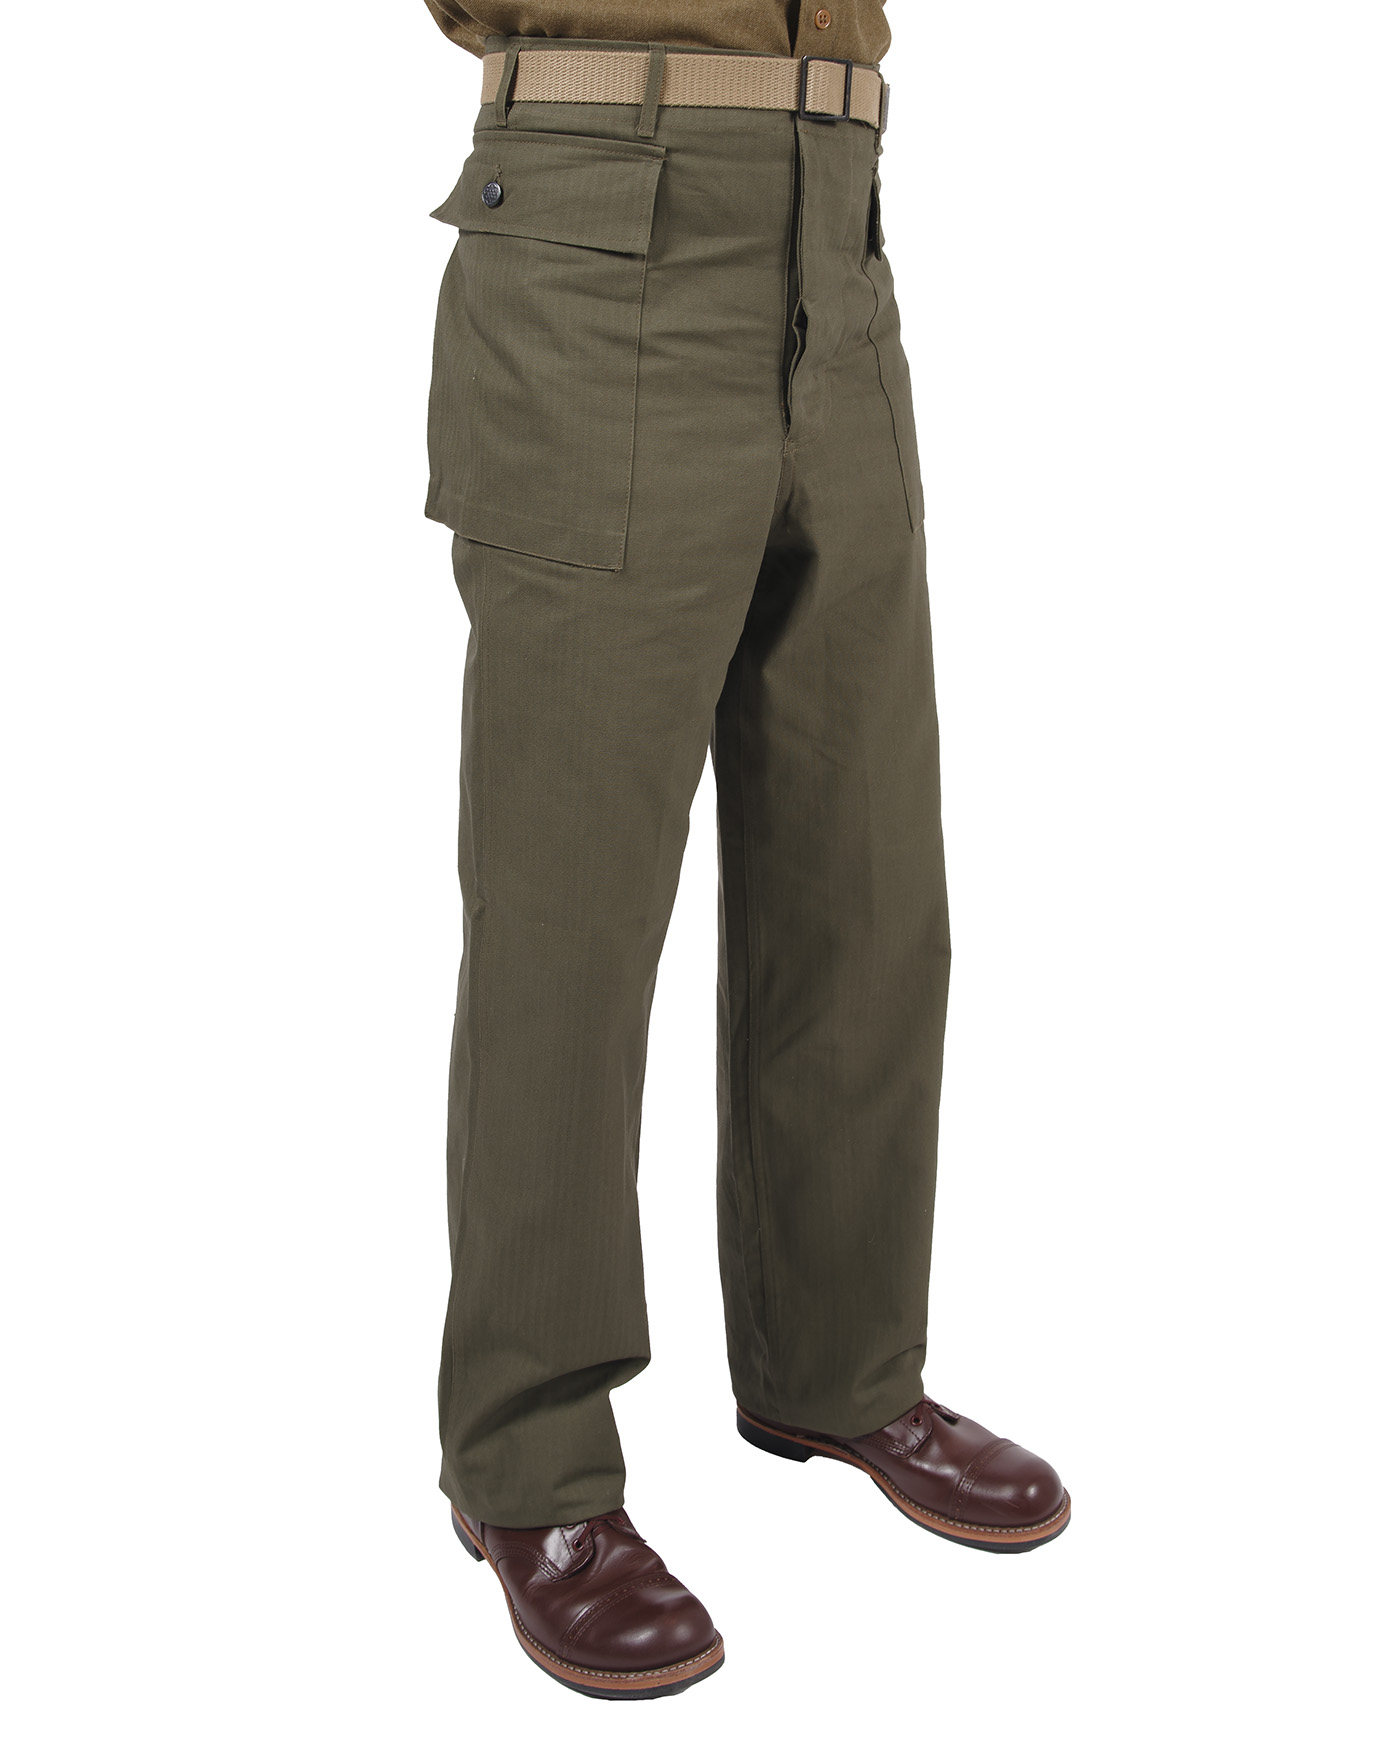 WW2 US Army Pants, WWII US Army HBT Trousers, Buy WW2 US Army Pants